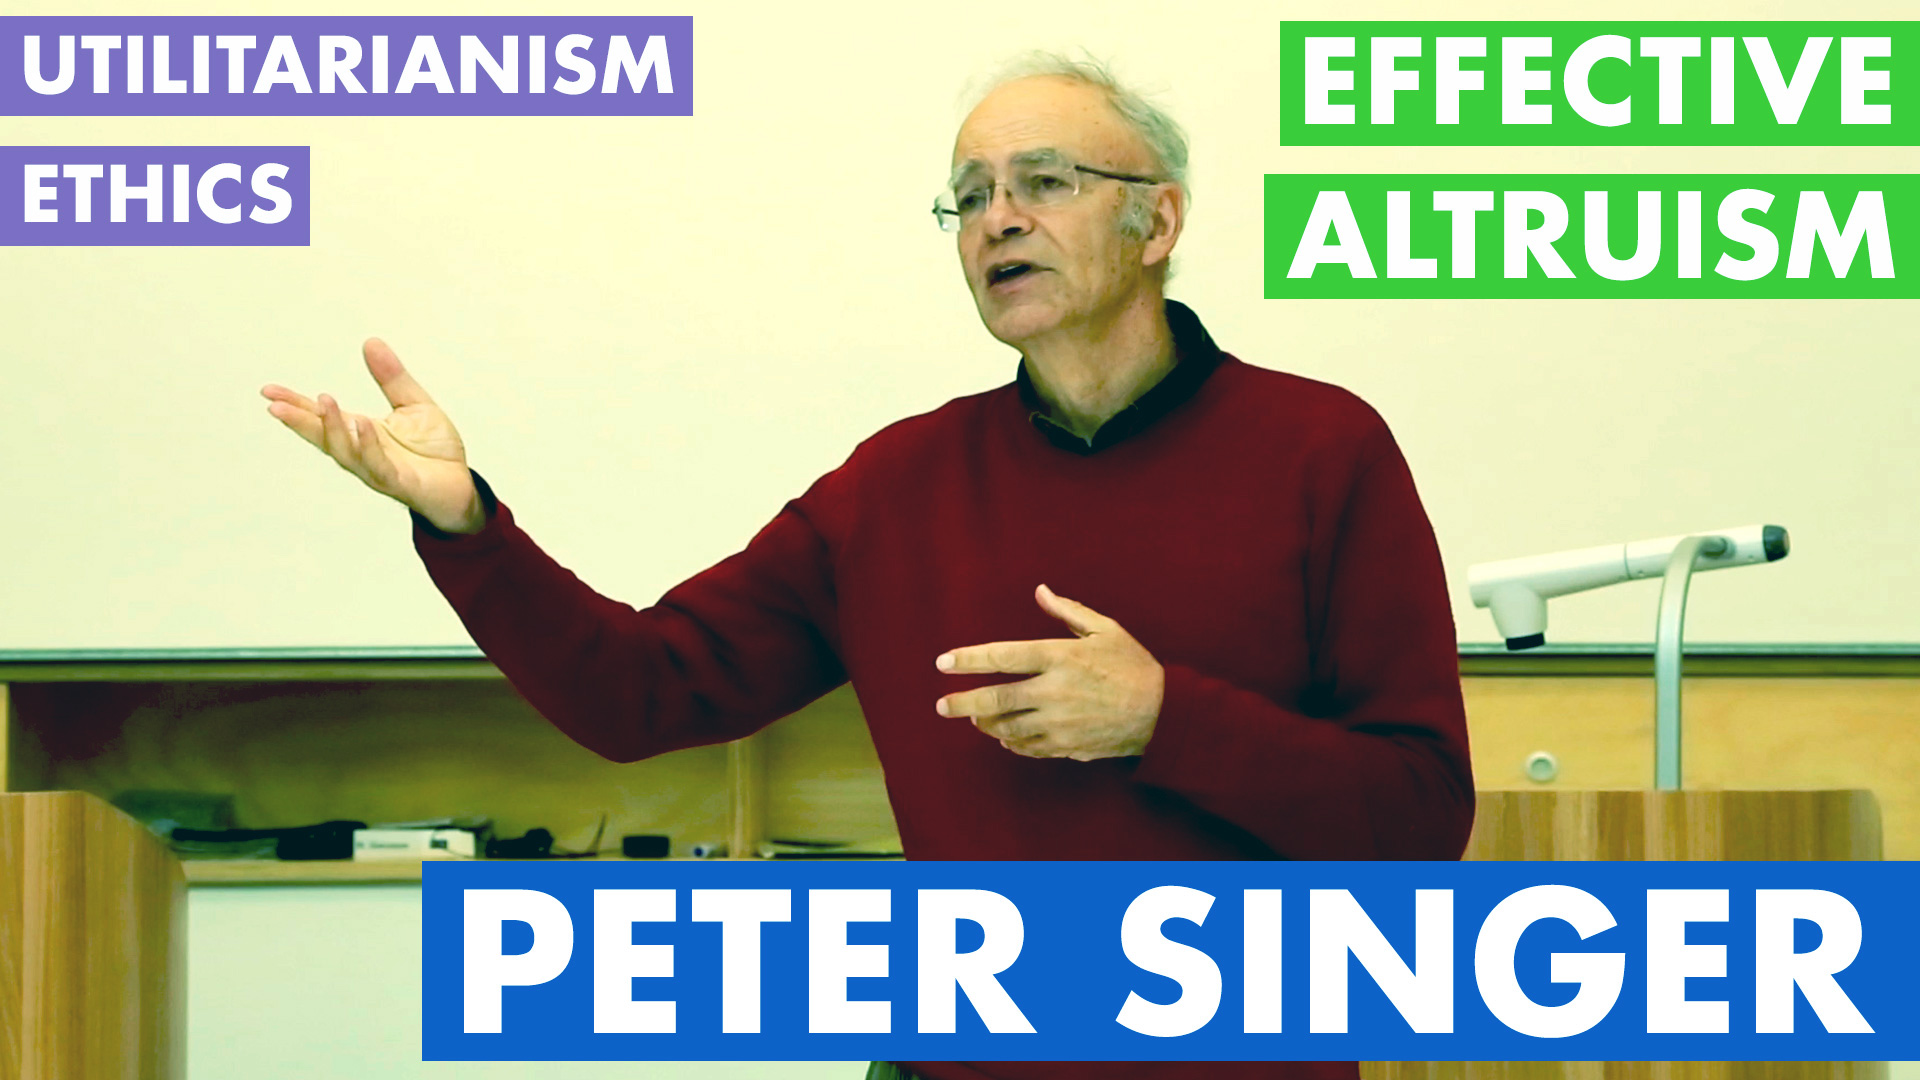 Peter Singer – Ethics, Utilitarianism & Effective Altruism